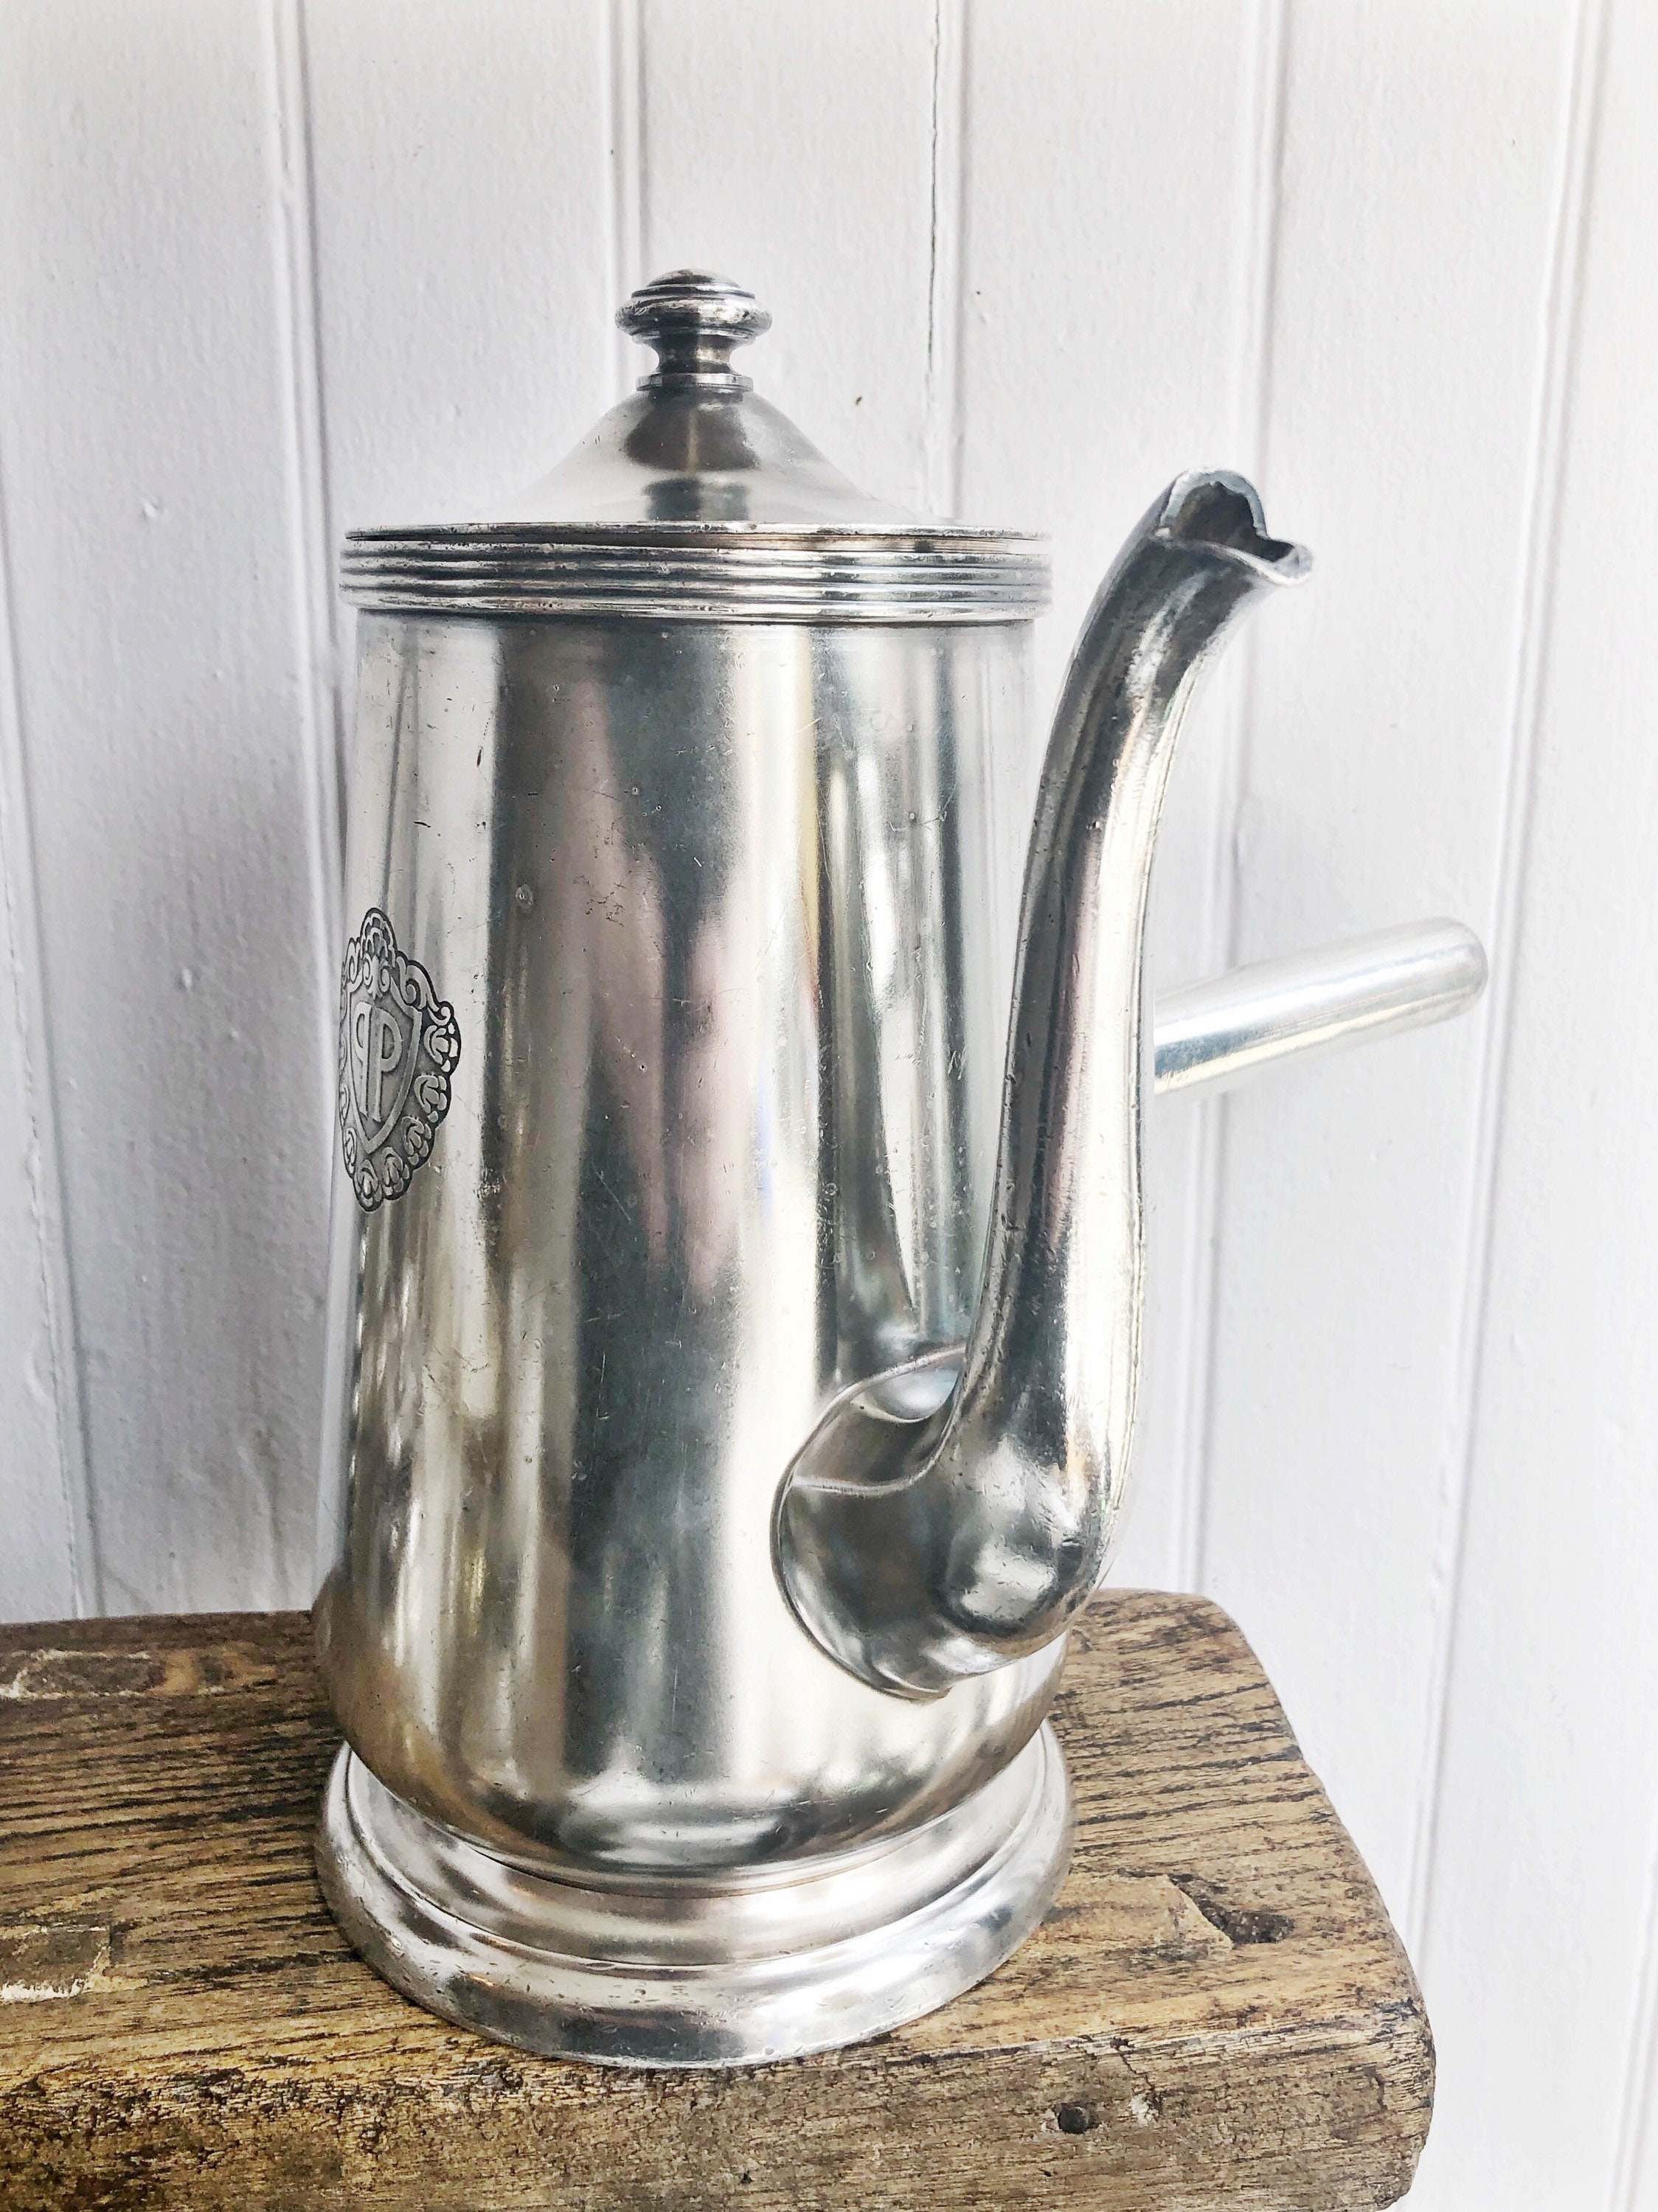 BILTMORE HOTEL SILVER Teapot Coffee Server Gorham 1928 Silver -  Norway